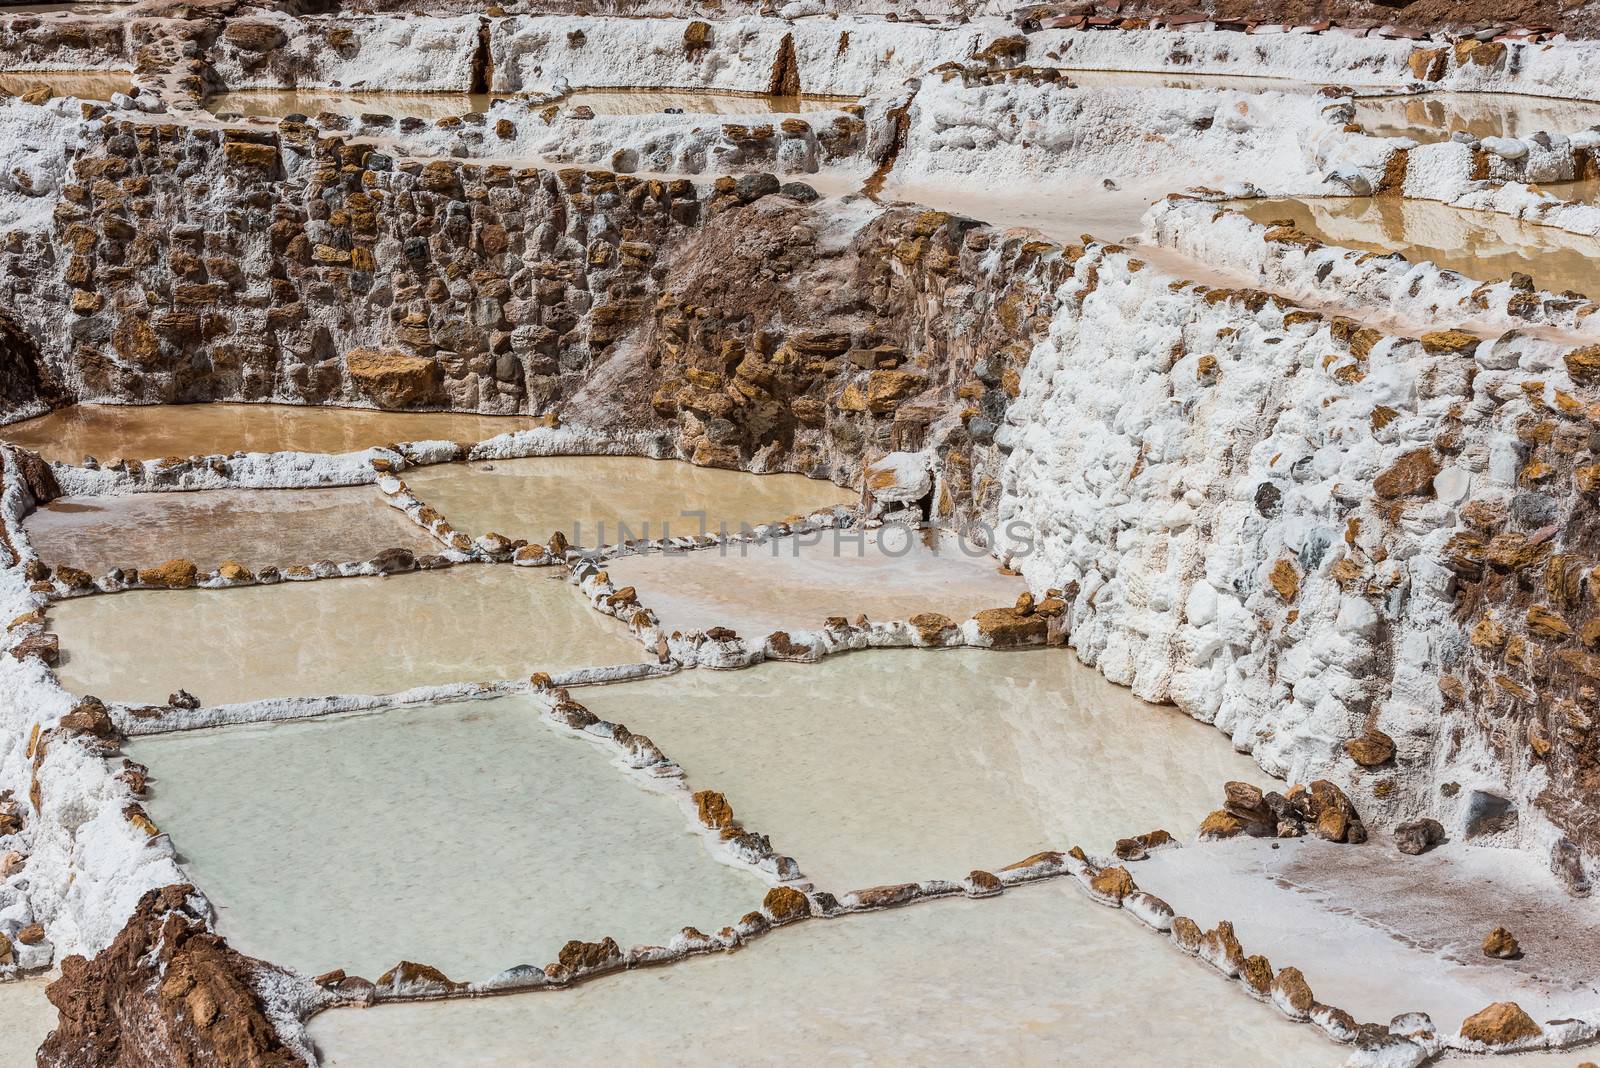 Maras salt mines peruvian Andes  Cuzco Peru by PIXSTILL